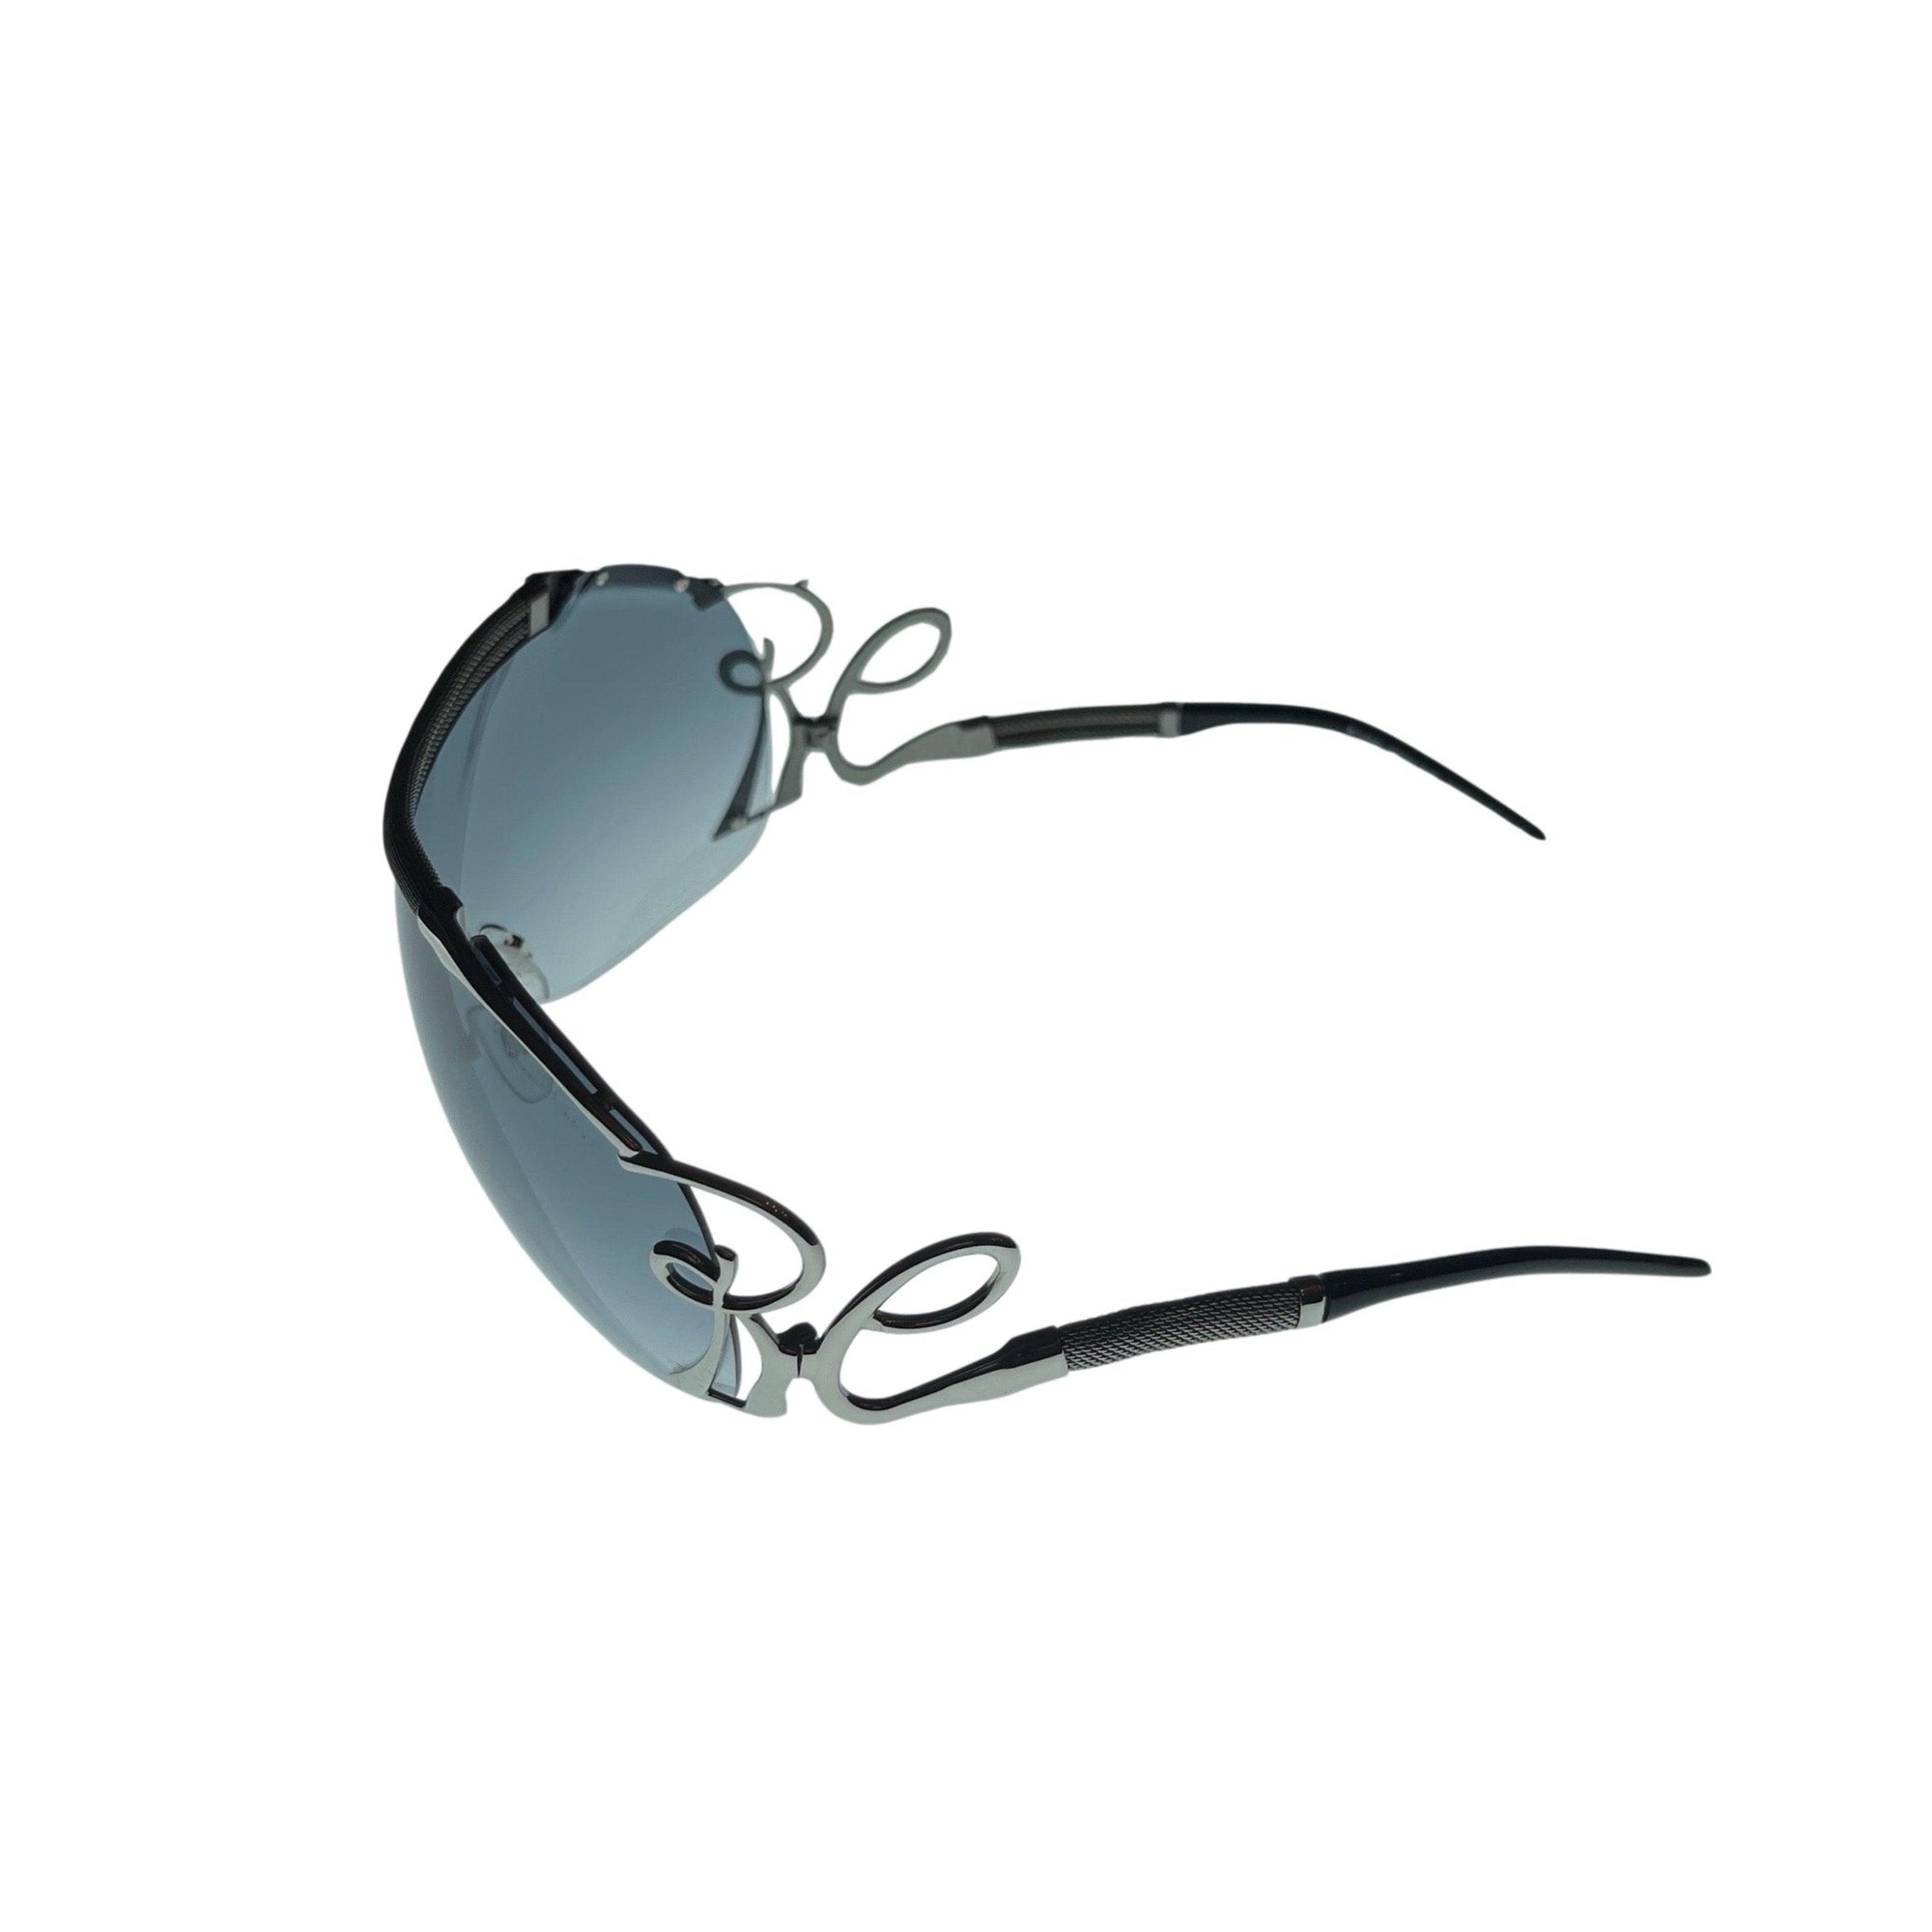 Roberto Cavalli Smokey Rimless Sunglasses - Sunglasses